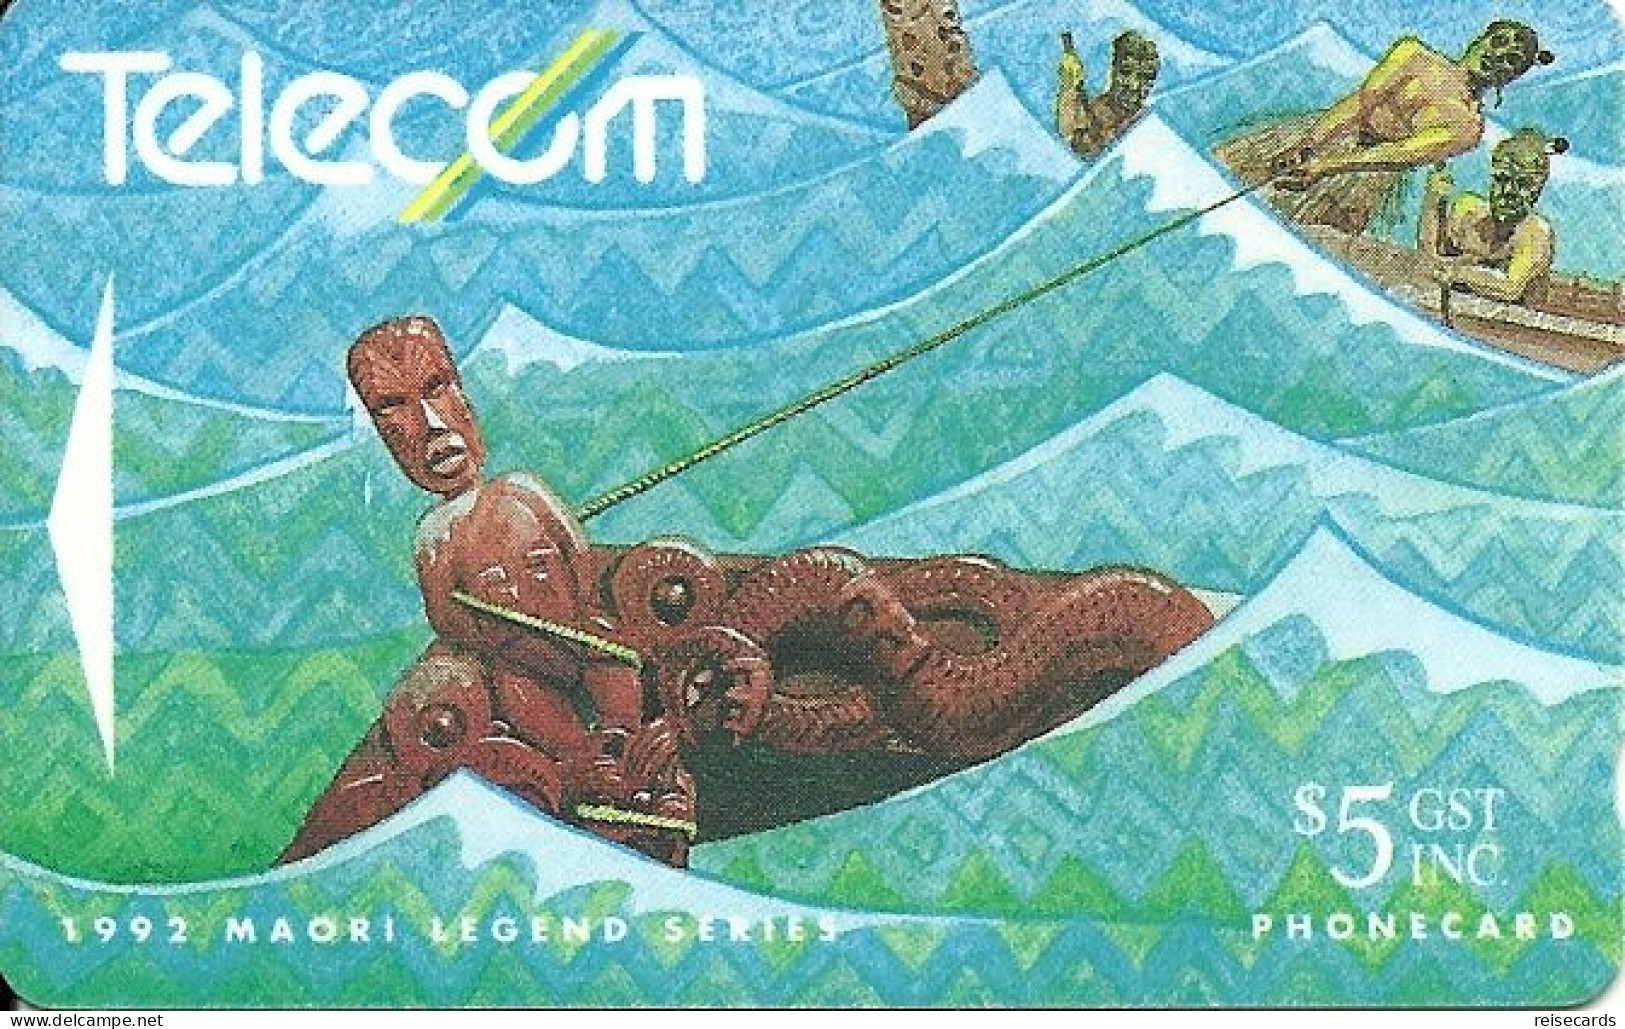 New Zealand: Telecom - 1992 Maori Legend , Maui Fishes Up The North Island - New Zealand